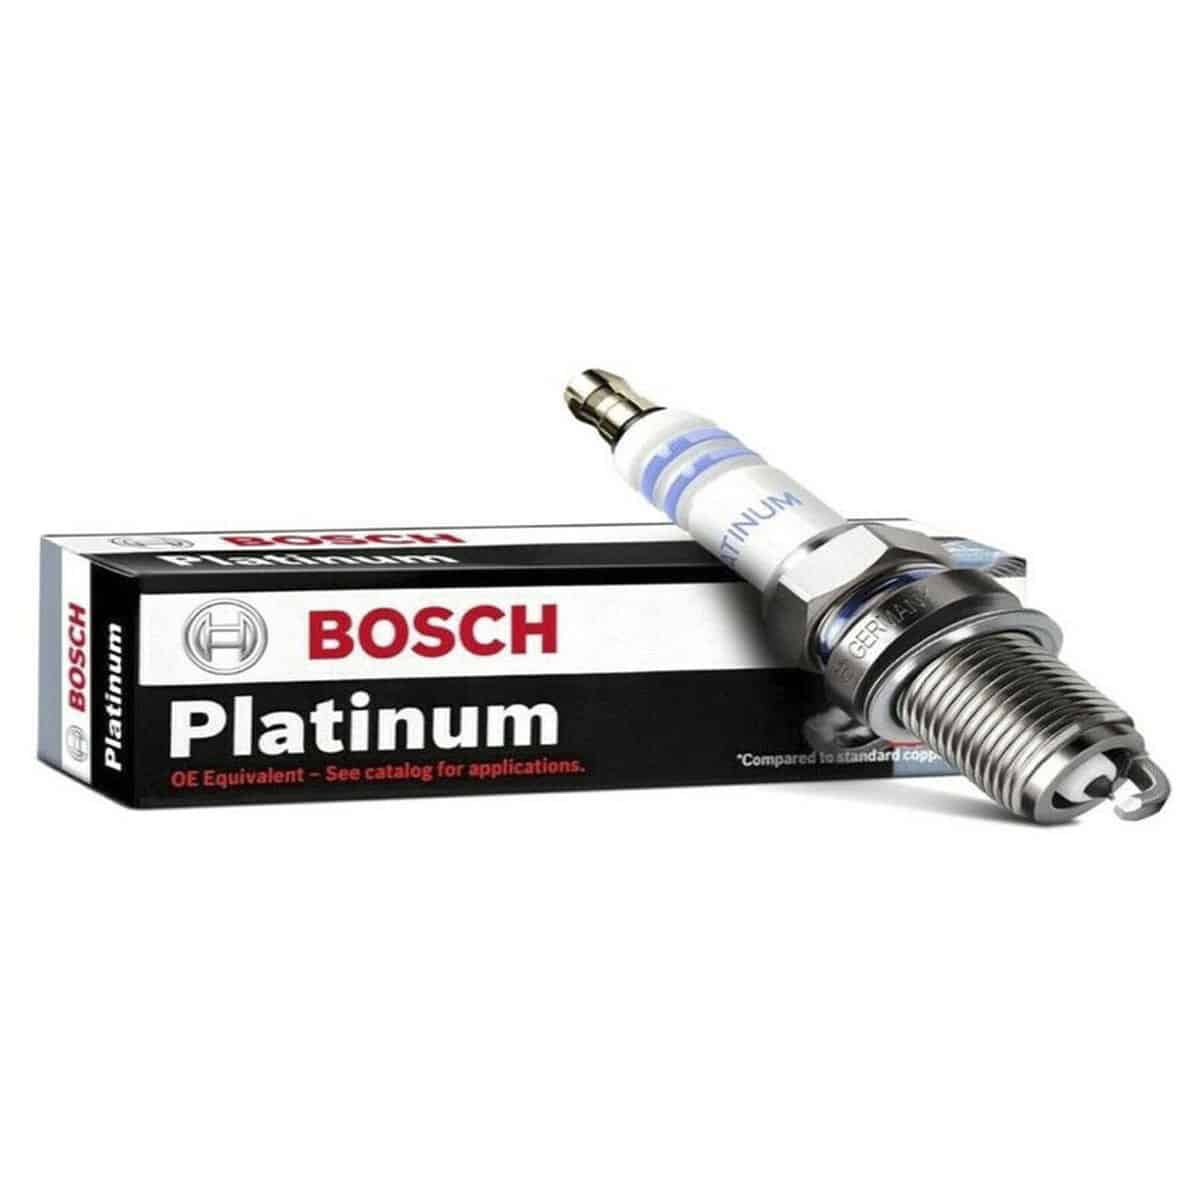 Bosch 4417 Platinum